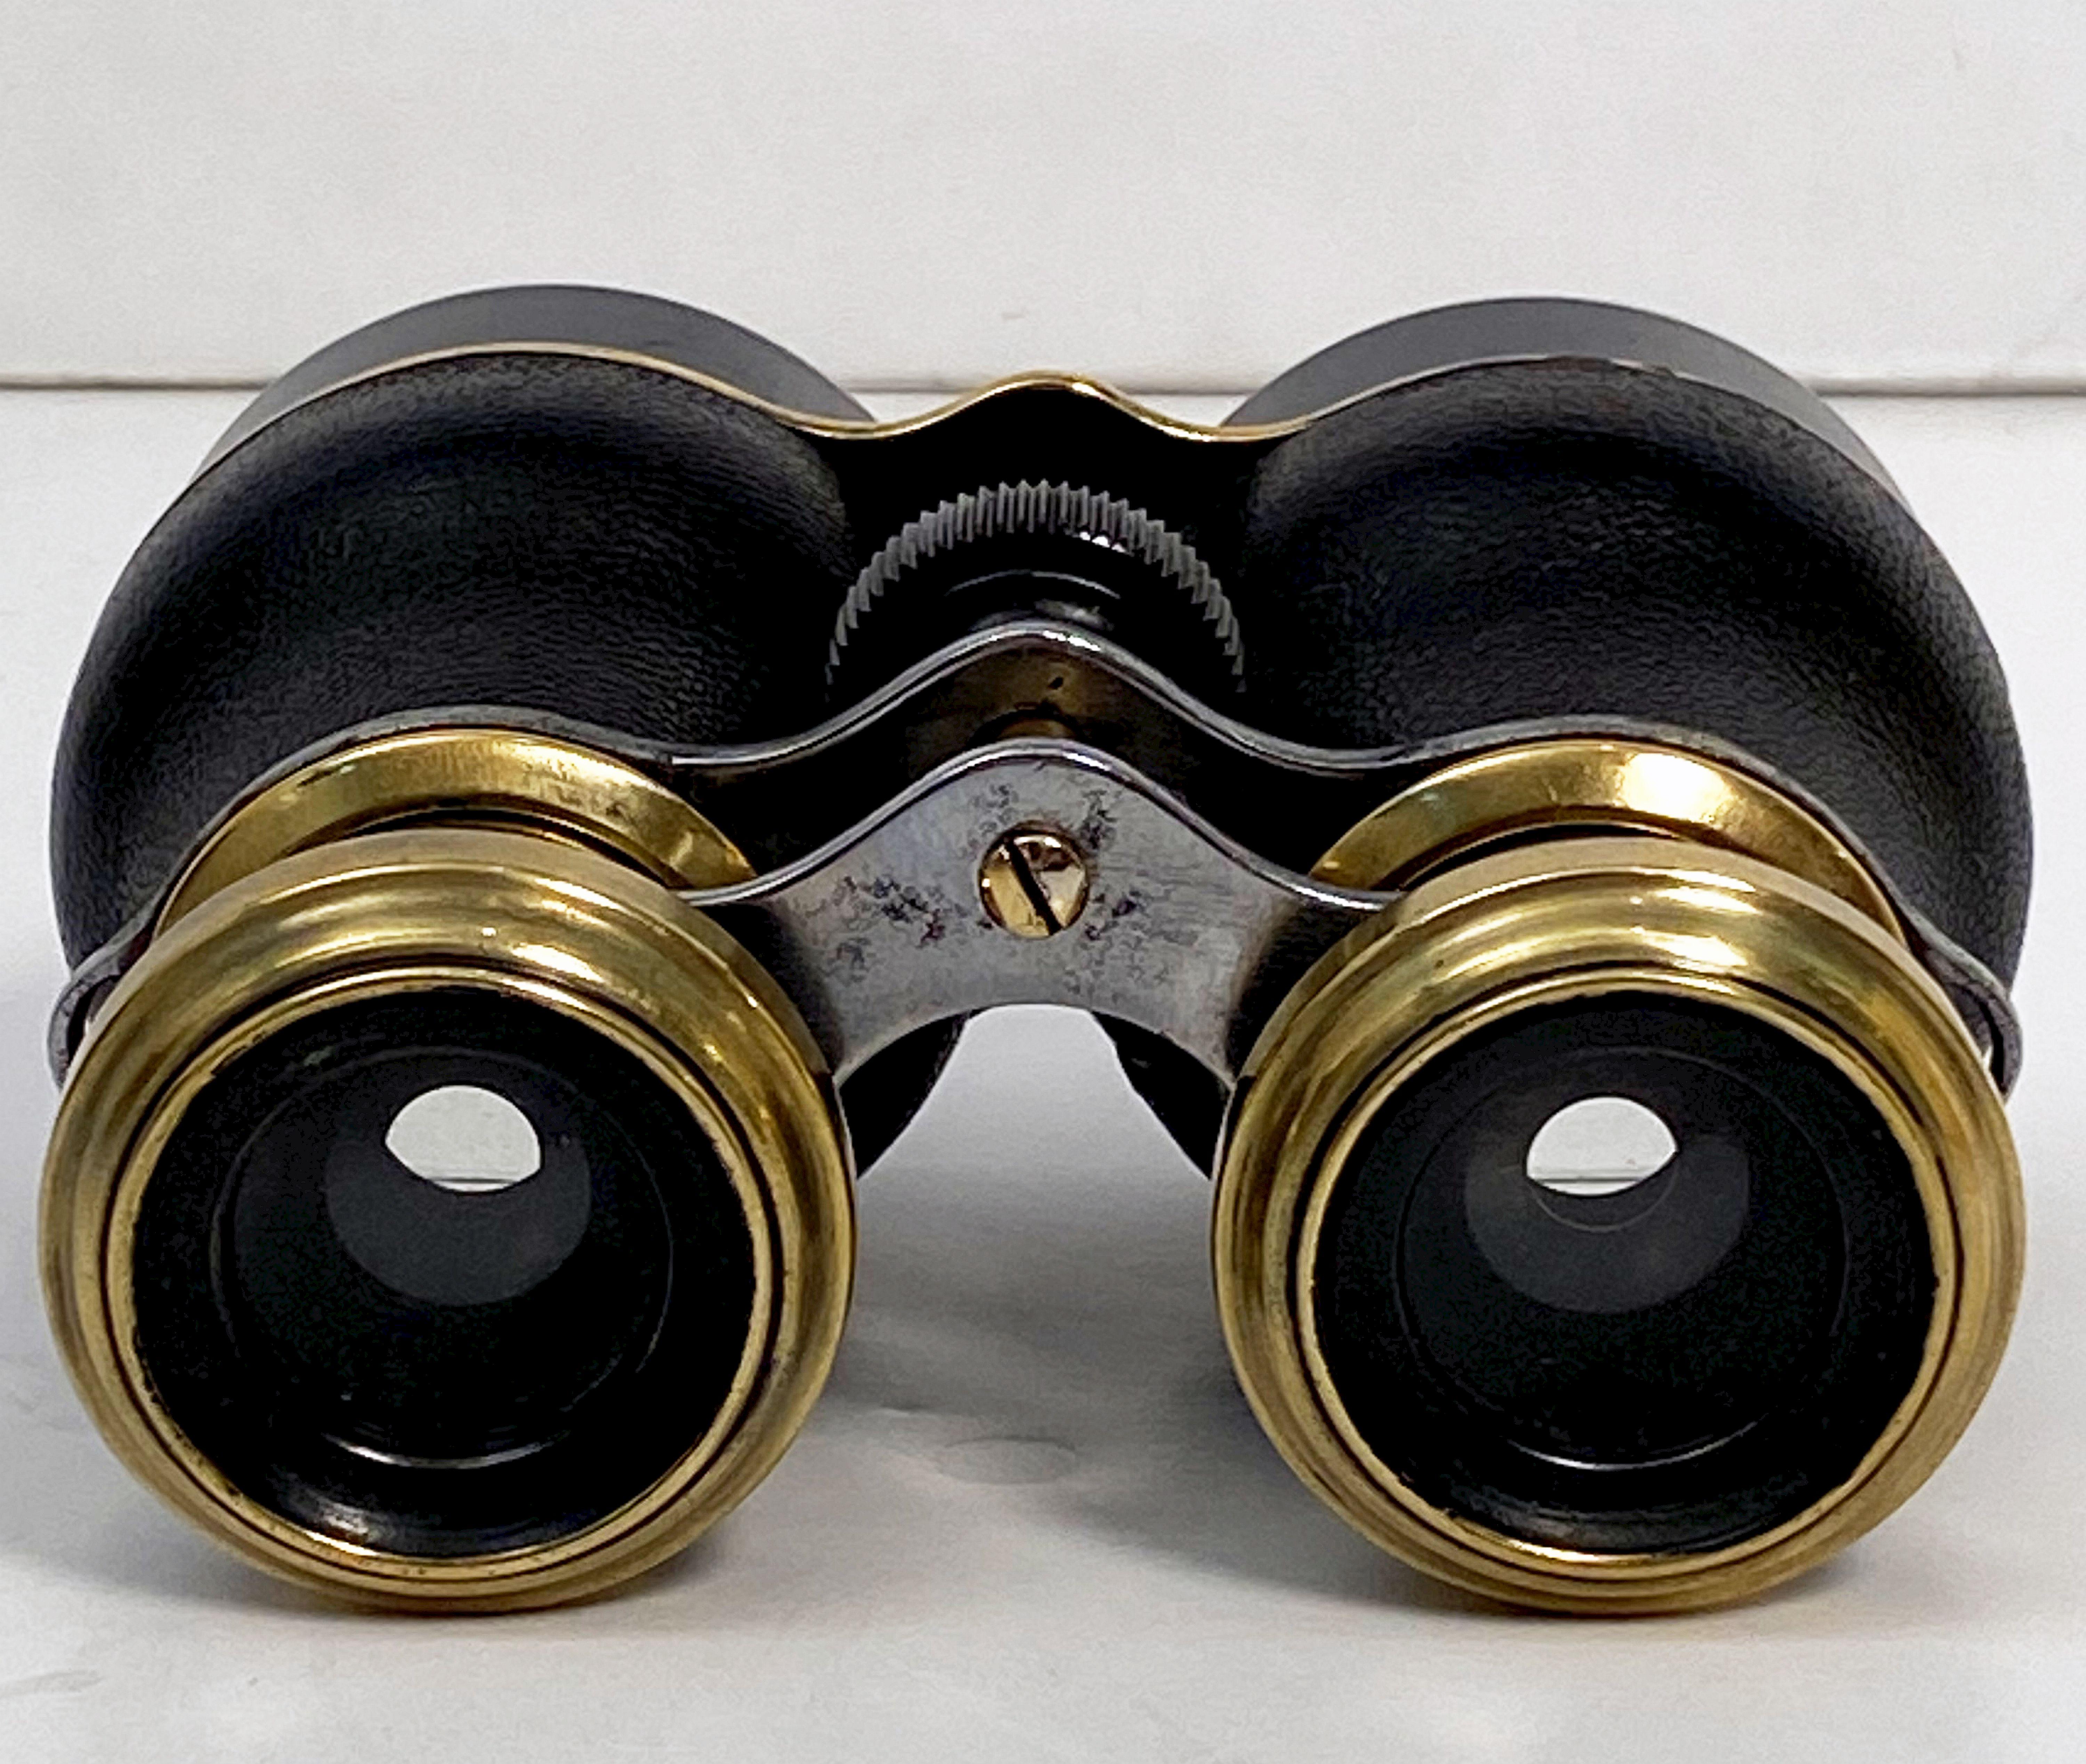 English Working Binoculars or Field Glasses by J.H. Steward Ltd., circa 1920 7